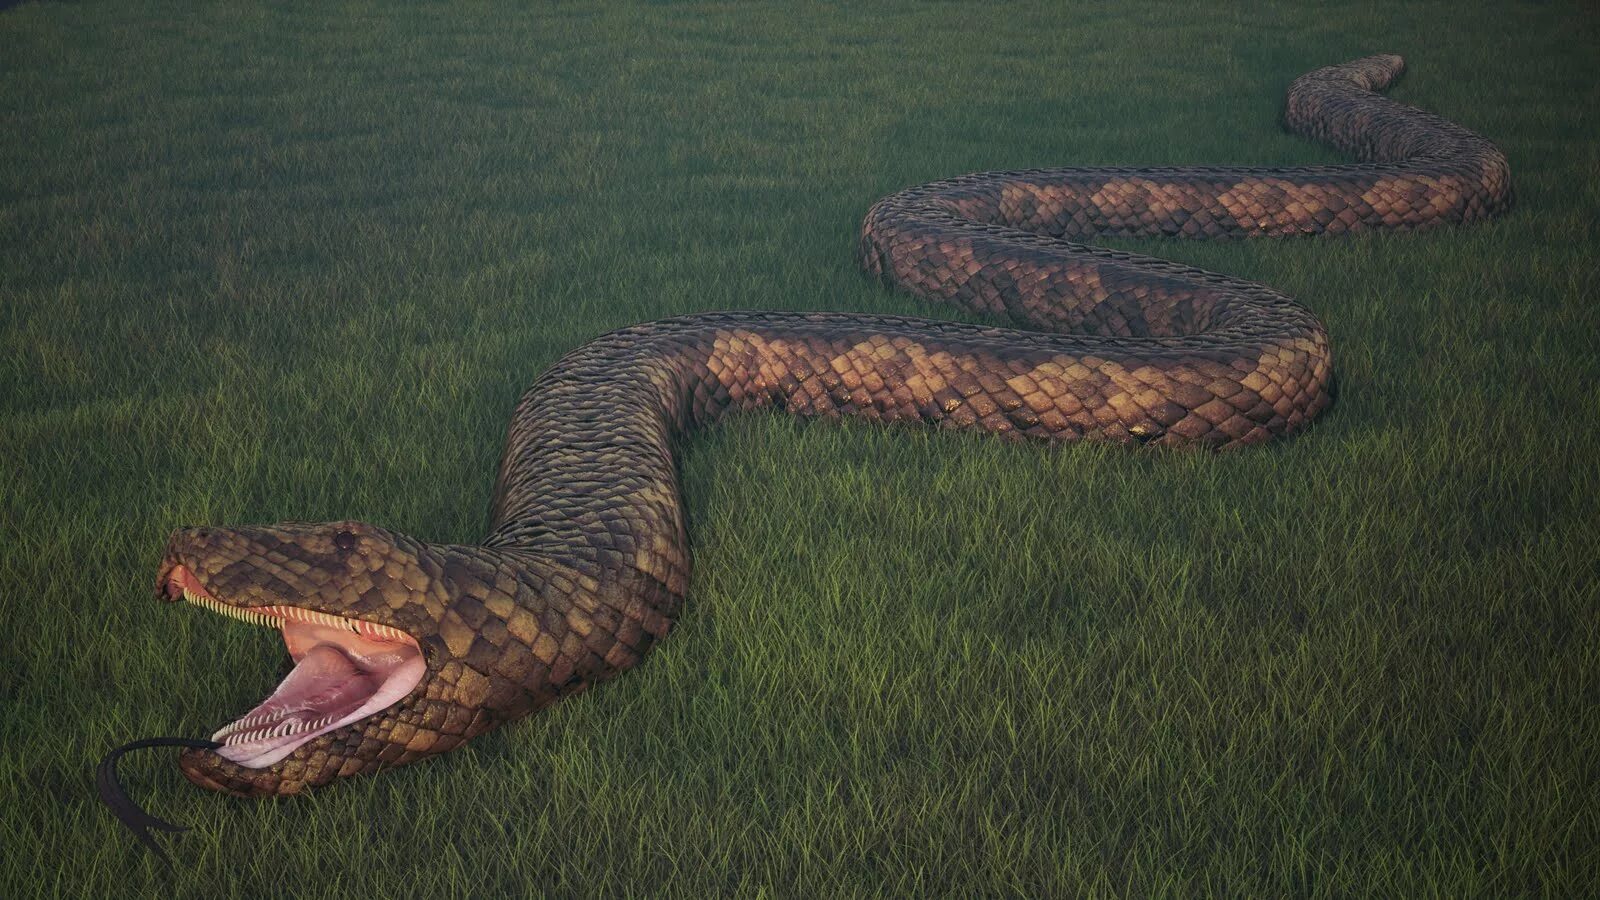 Анаконда змея. Река Амазонка змея Анаконда. Самая большая змея в мире Анаконда. ТИТАНОБОА змея и Анаконда.